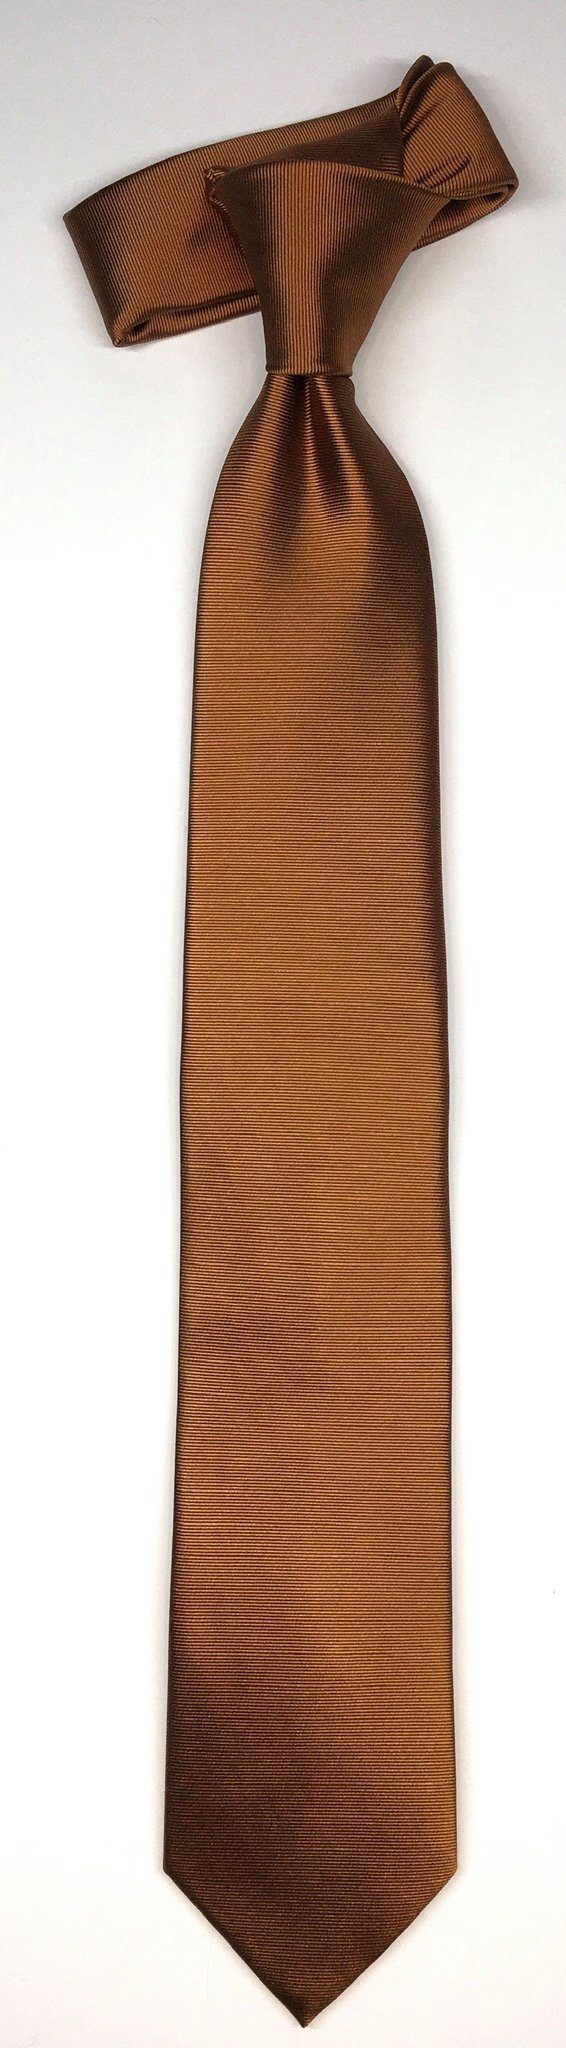 Seidenfalter Krawatte Seidenfalter Cognac Design Seidenfalter 7cm Uni im Uni Krawatte edlen Krawatte